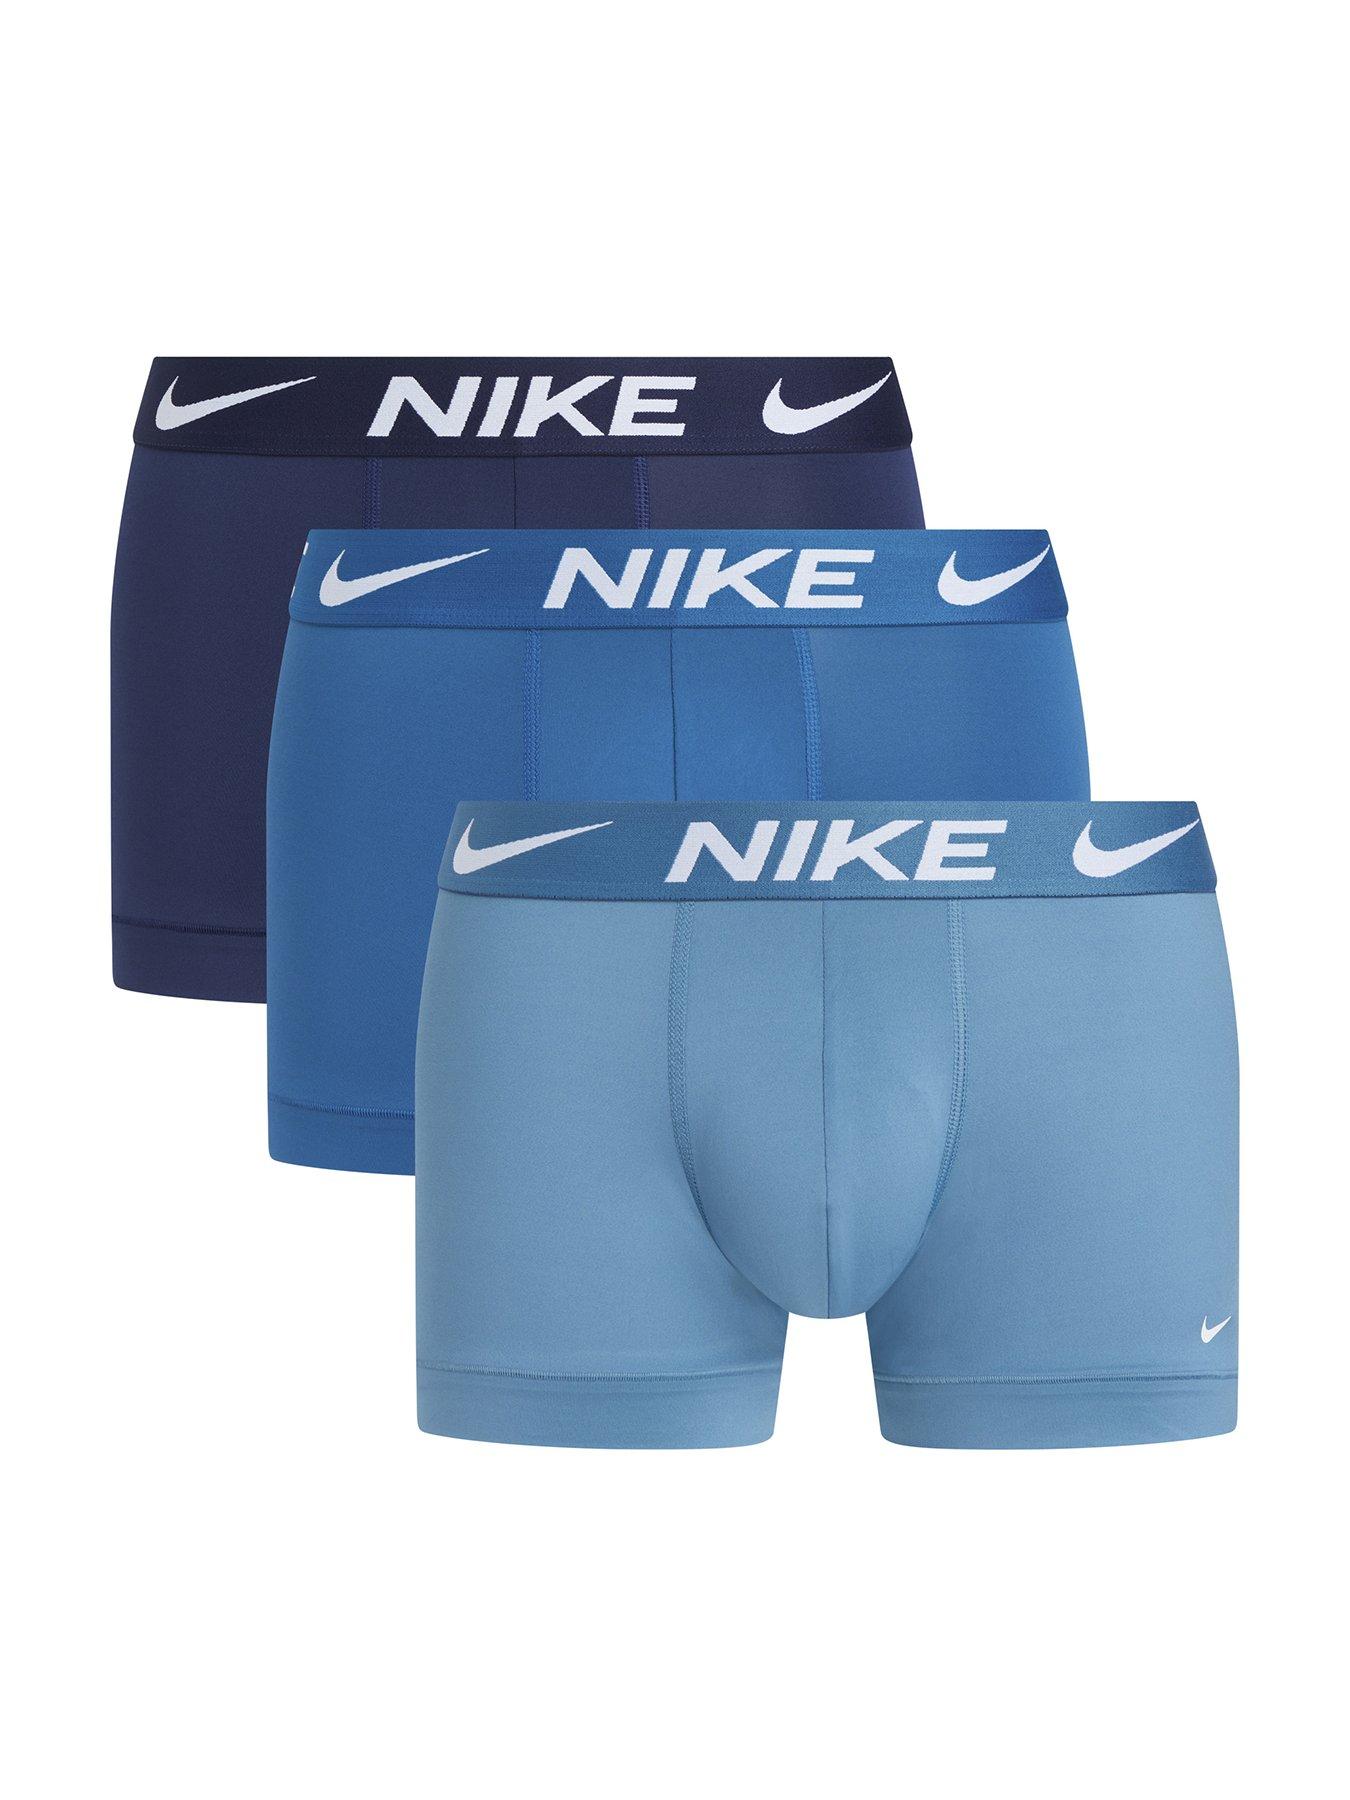 Nike Boxer Brief 3er Pack 